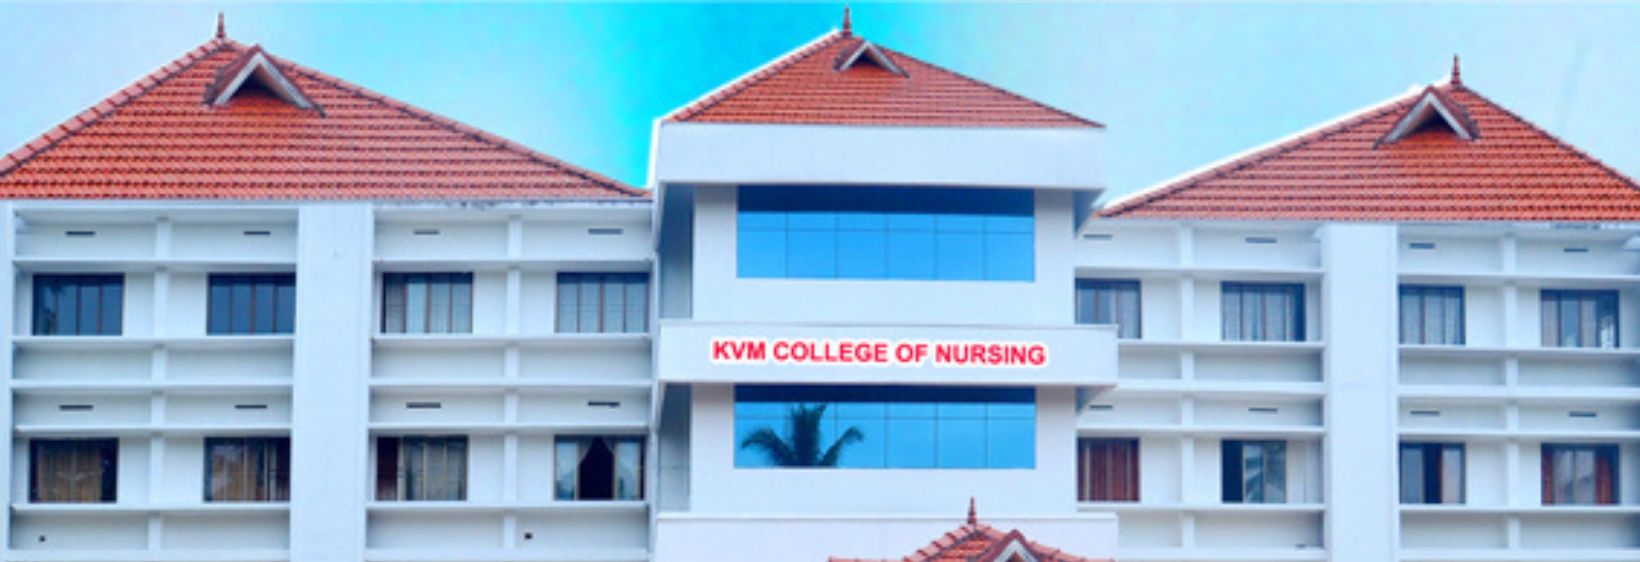 K V M College of Nursing -  Alappuzha